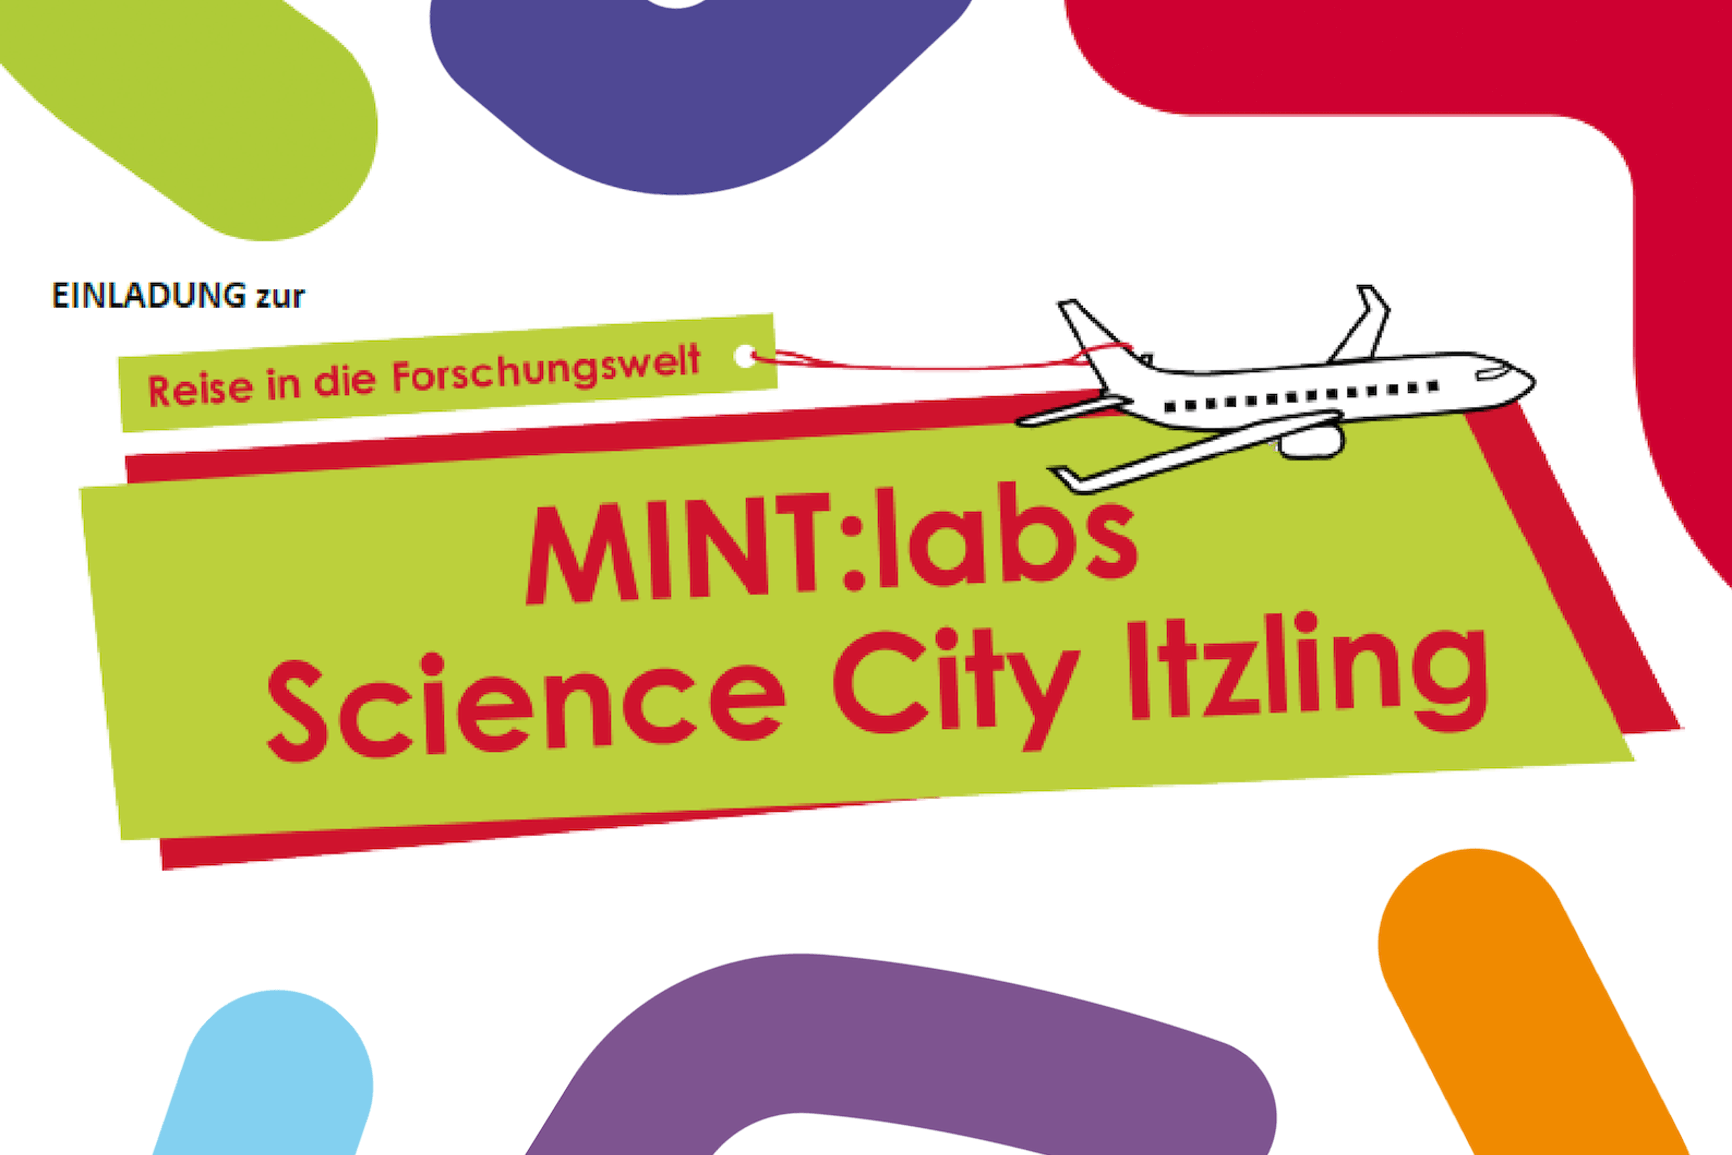 MINT:labs Science City Itzling